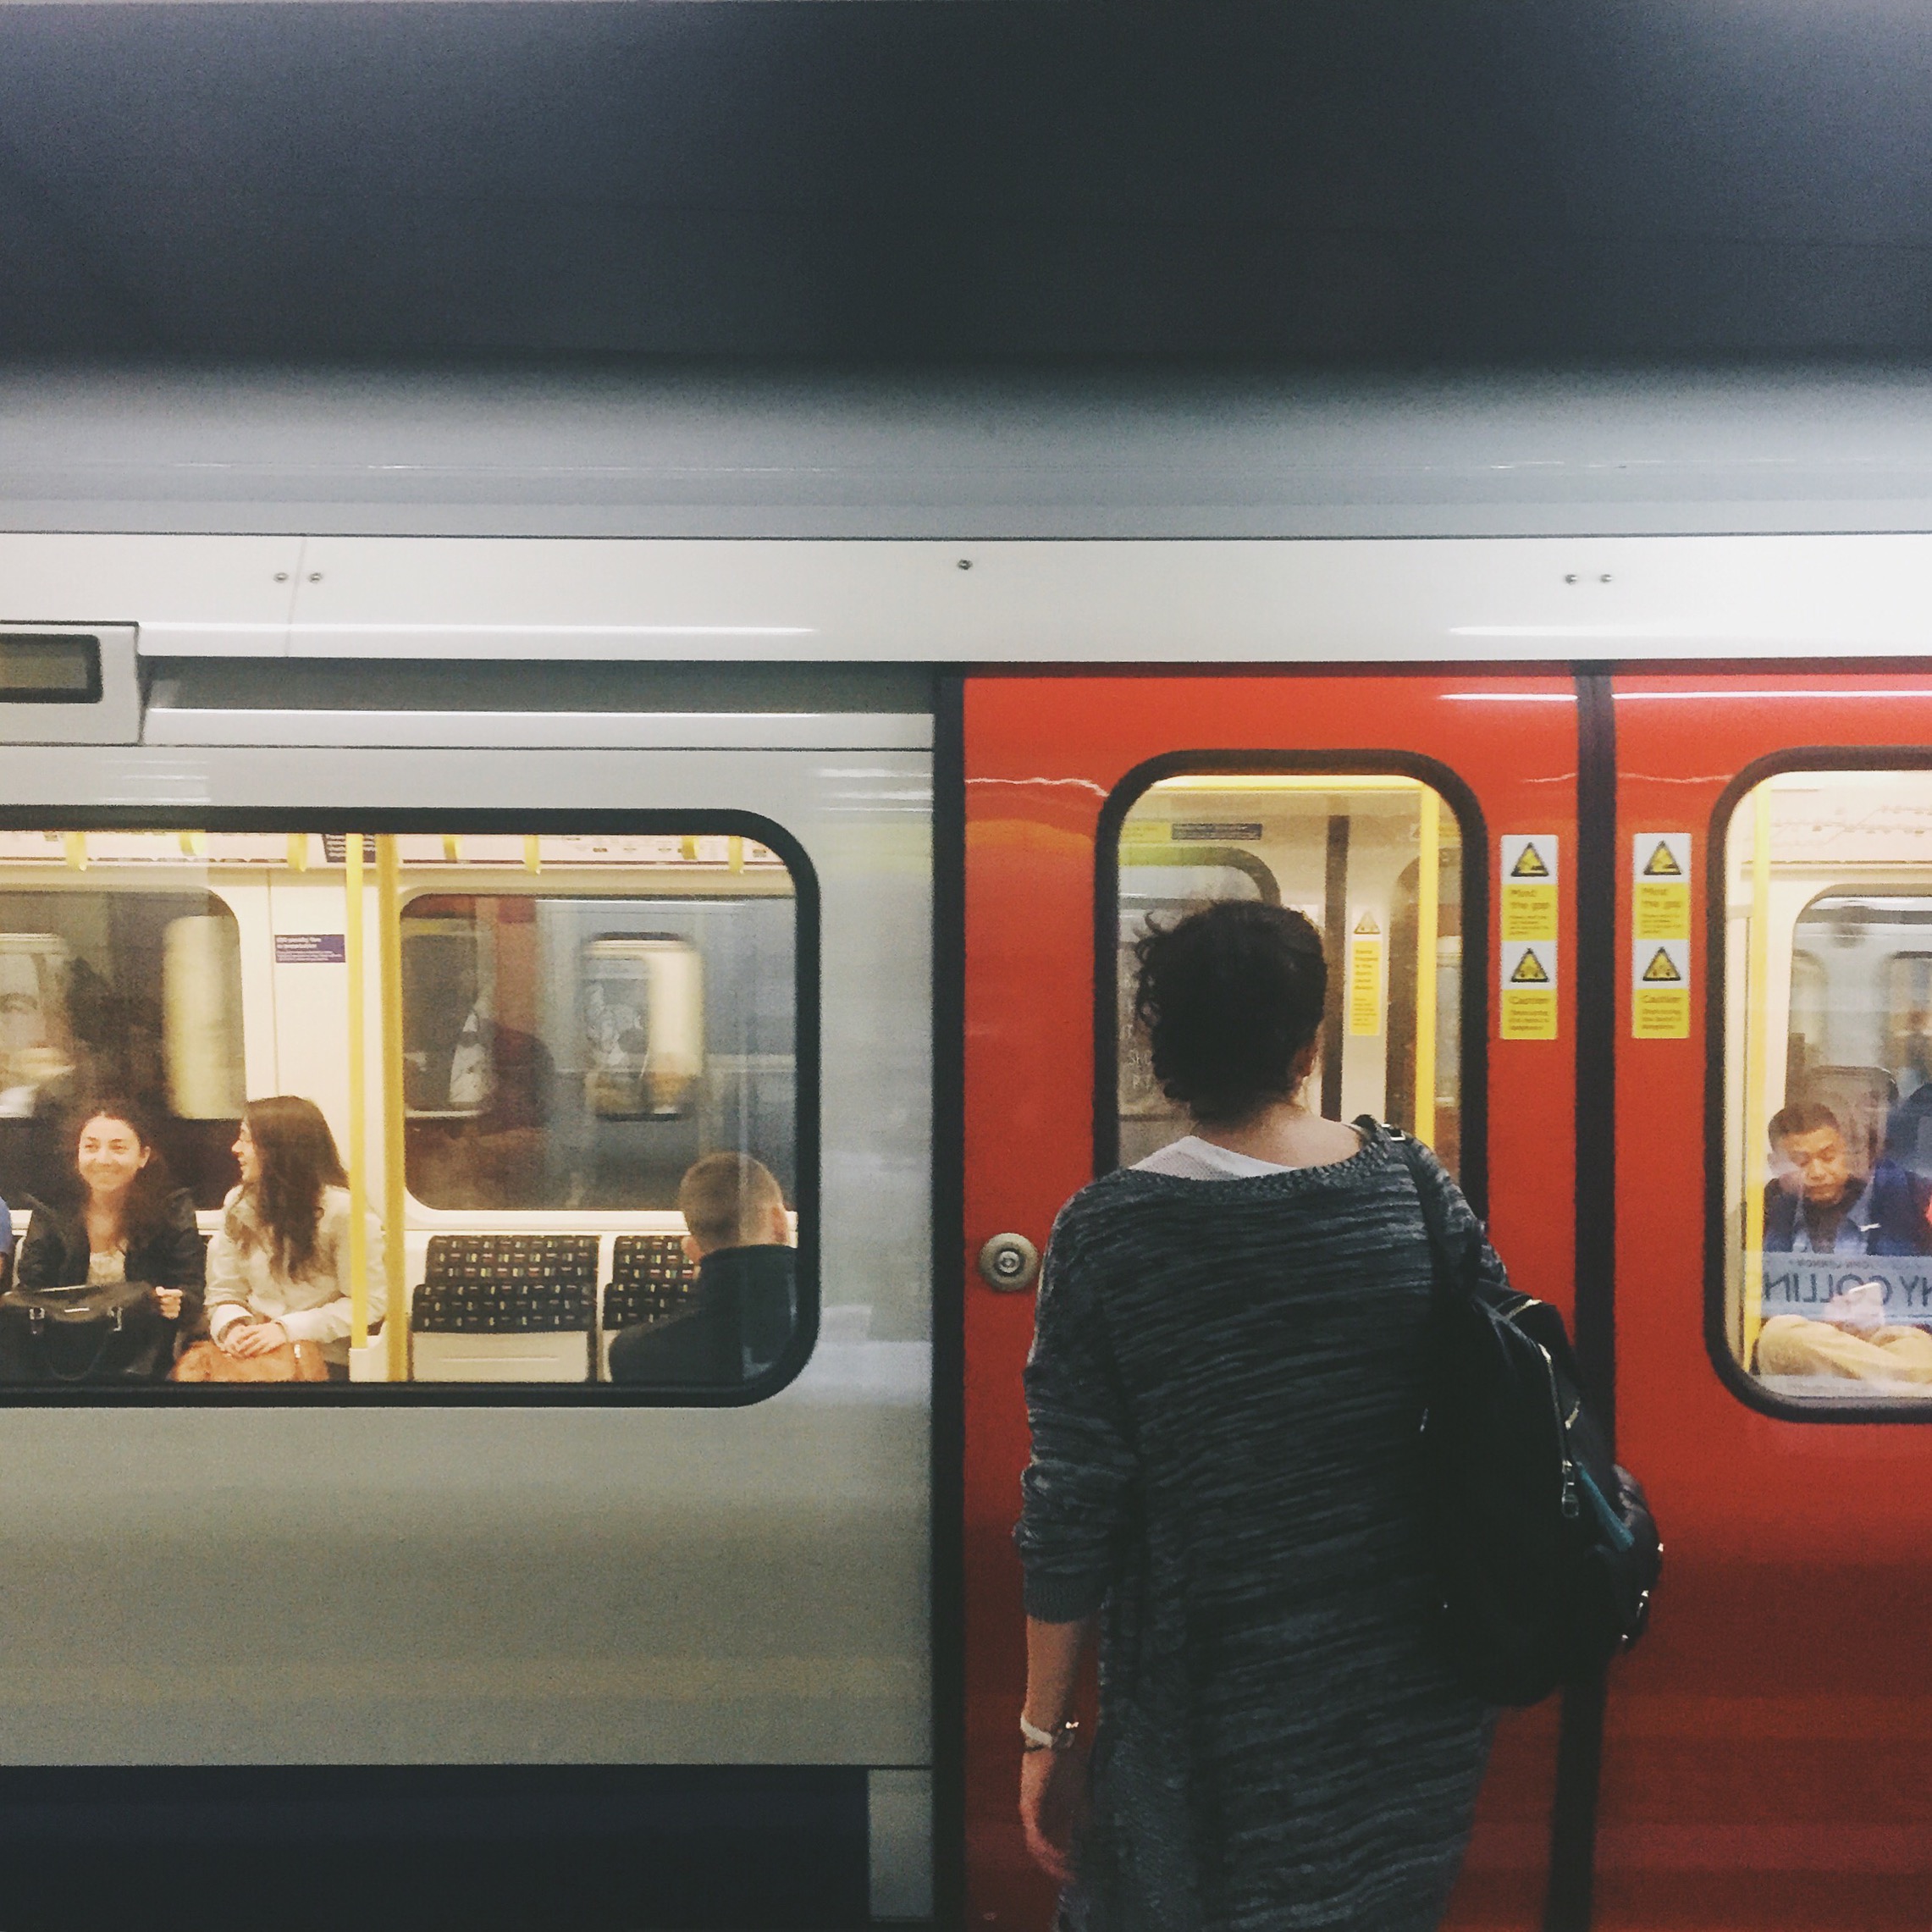   "Mind the Gap"&nbsp; ft. Sarah Conklin  Covent Garden Tube Station &nbsp;|| London, UK ||&nbsp;June 2015 || Sony A6000 